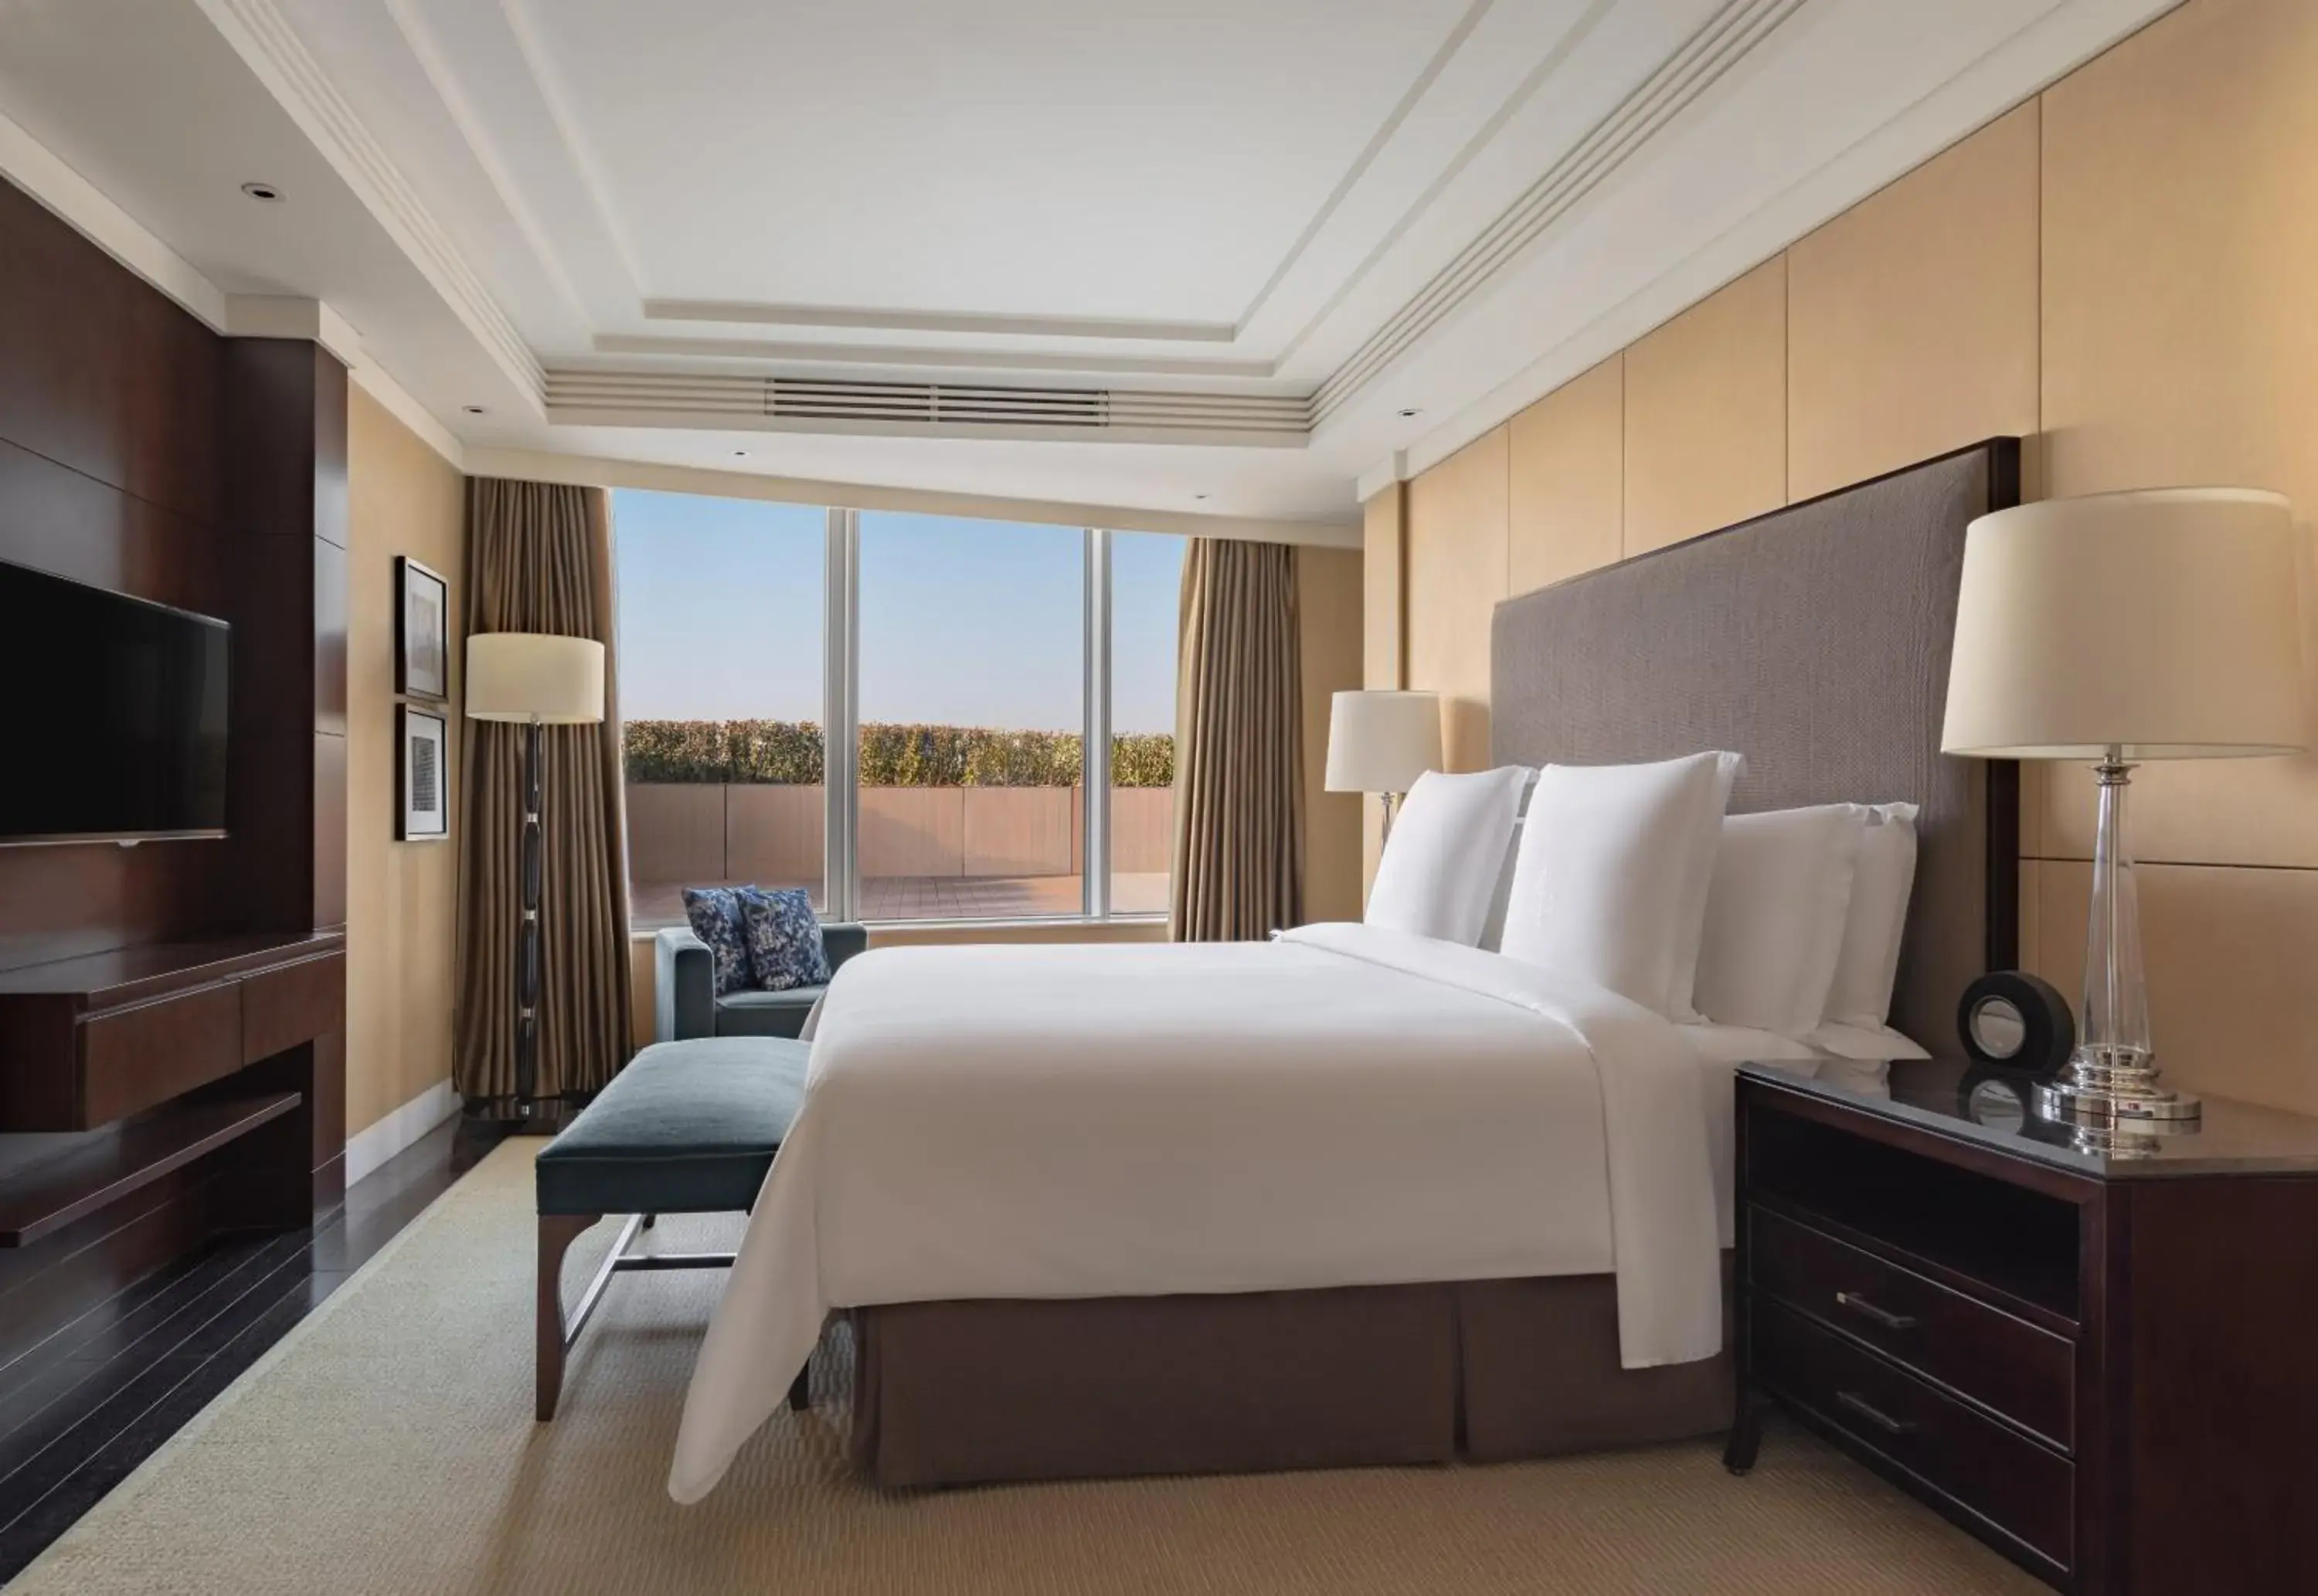 Bedroom in Four Seasons Hotel Beijing